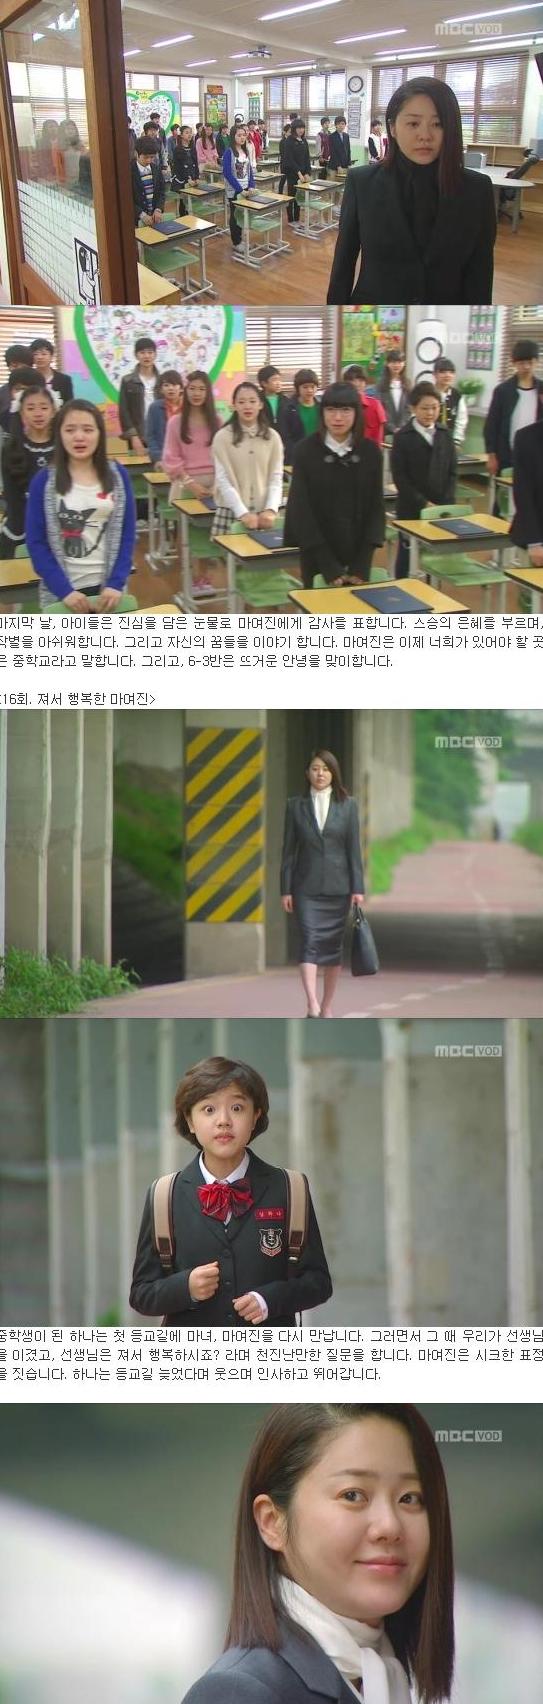 episode 16 captures for the Korean drama 'The Queen's Classroom'